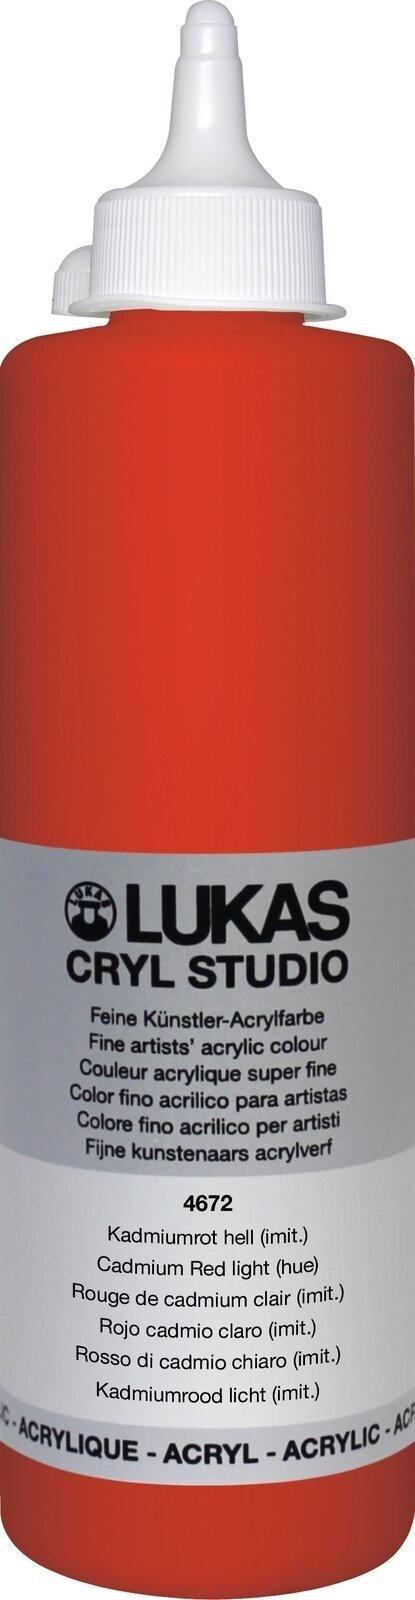 Acrylic Paint Lukas Cryl Studio Acrylic Paint 500 ml Cadmium Red Light Hue